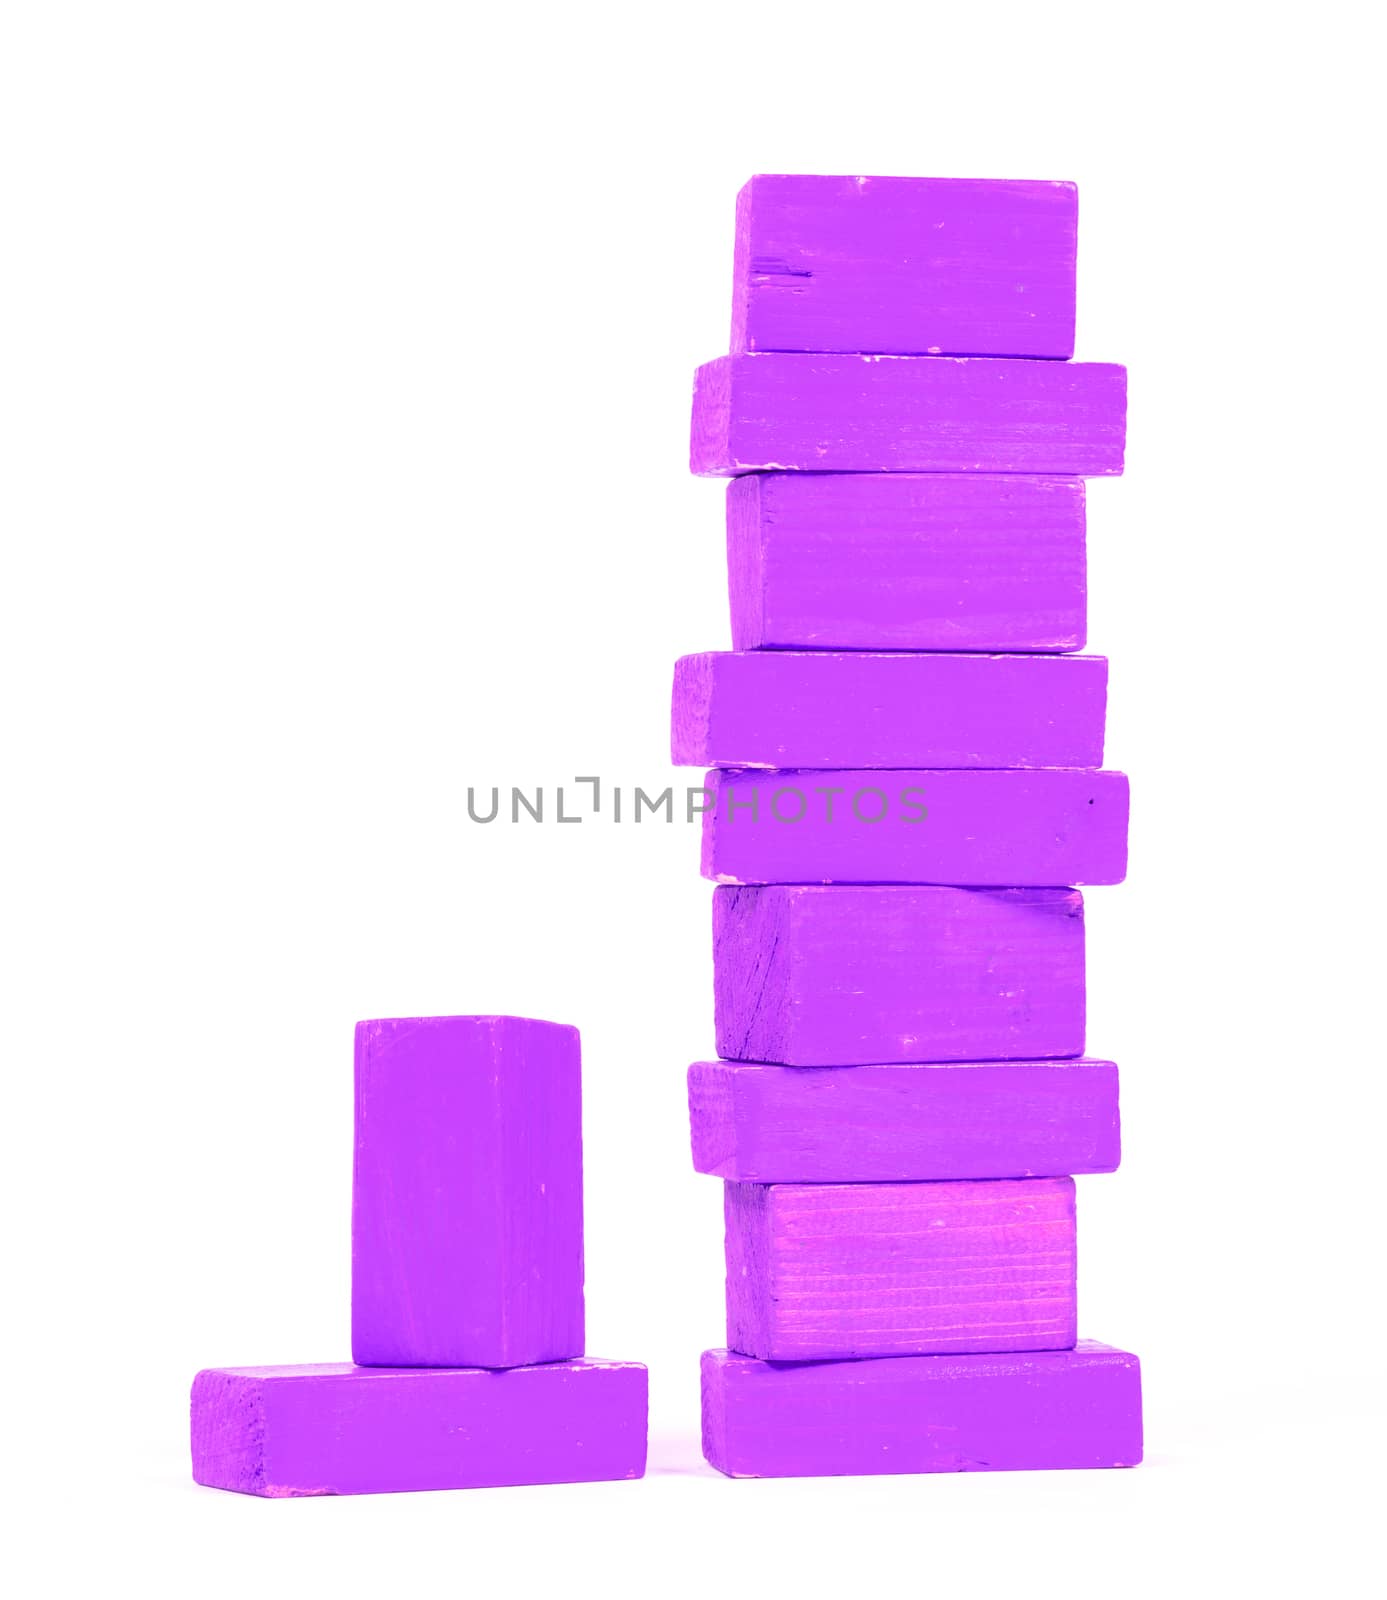 Vintage purple building blocks isolated on white background